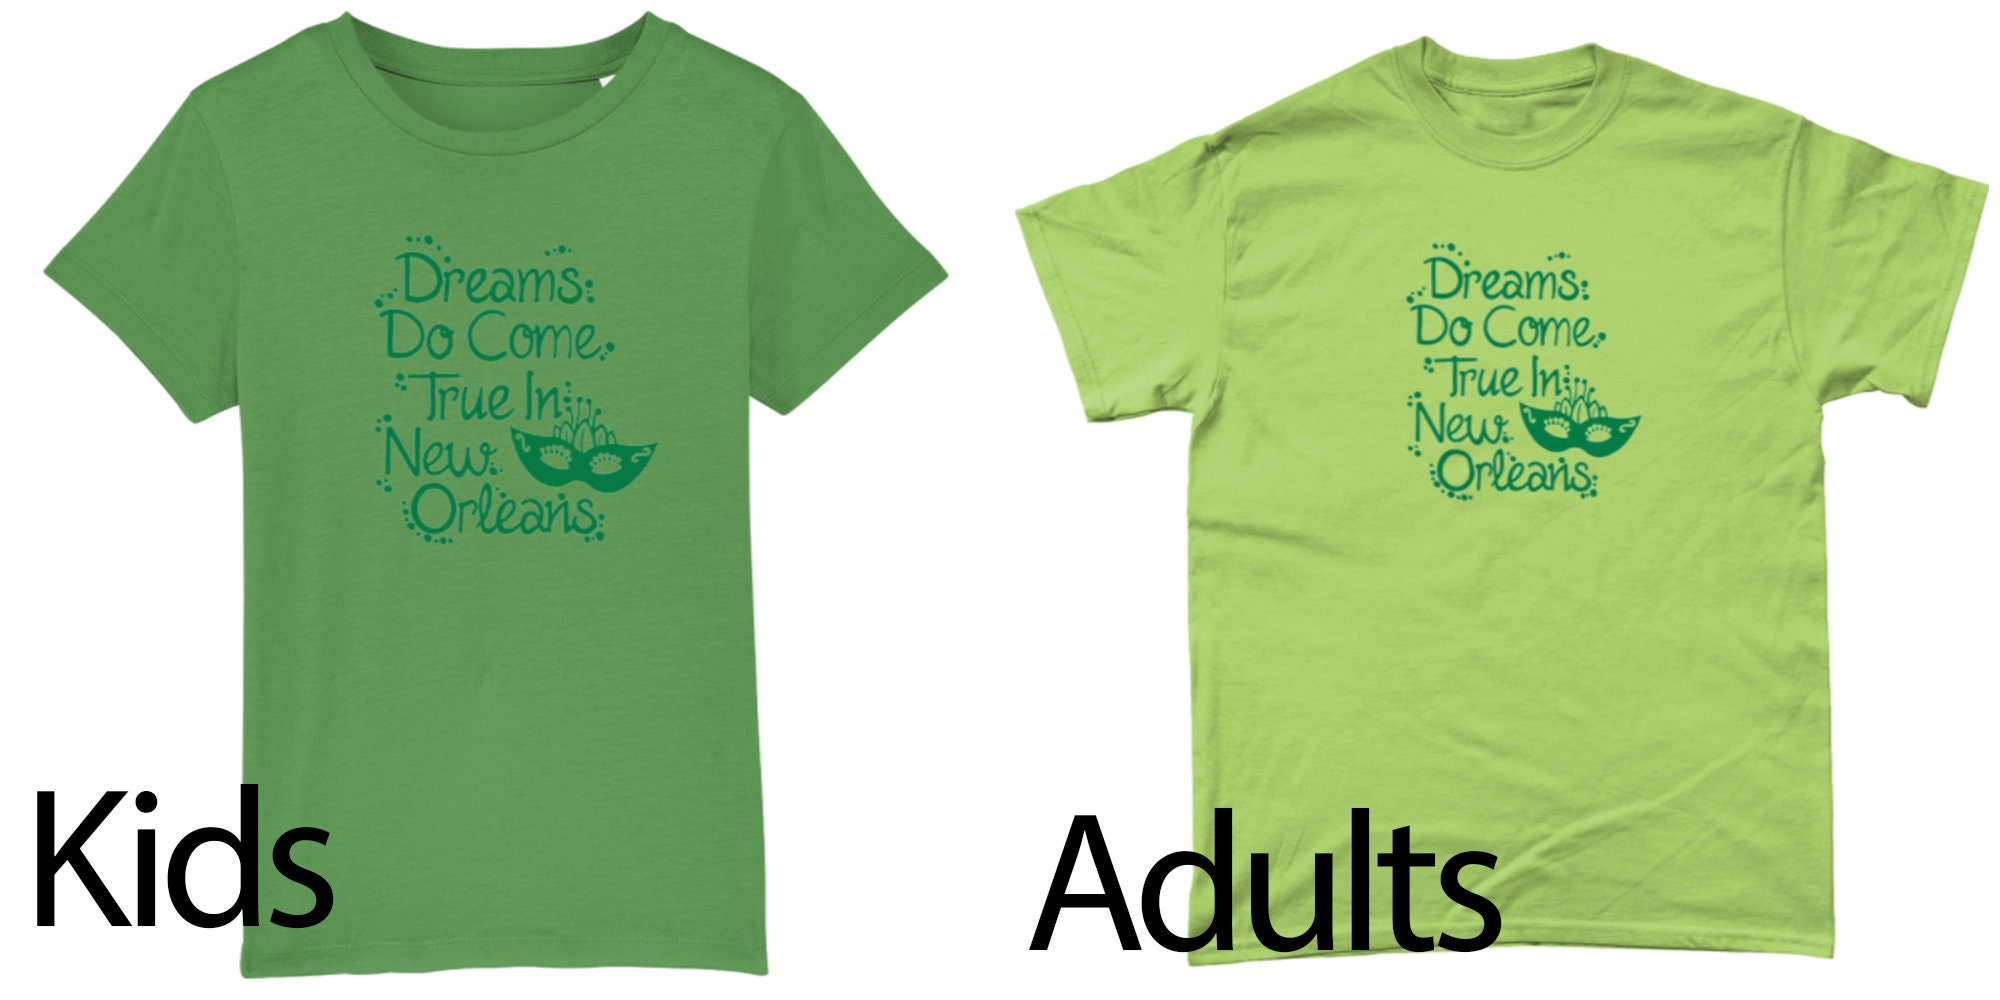 Adults the Etsy Wreck Kids Ralph T-shirts It and Break - Internet Princess